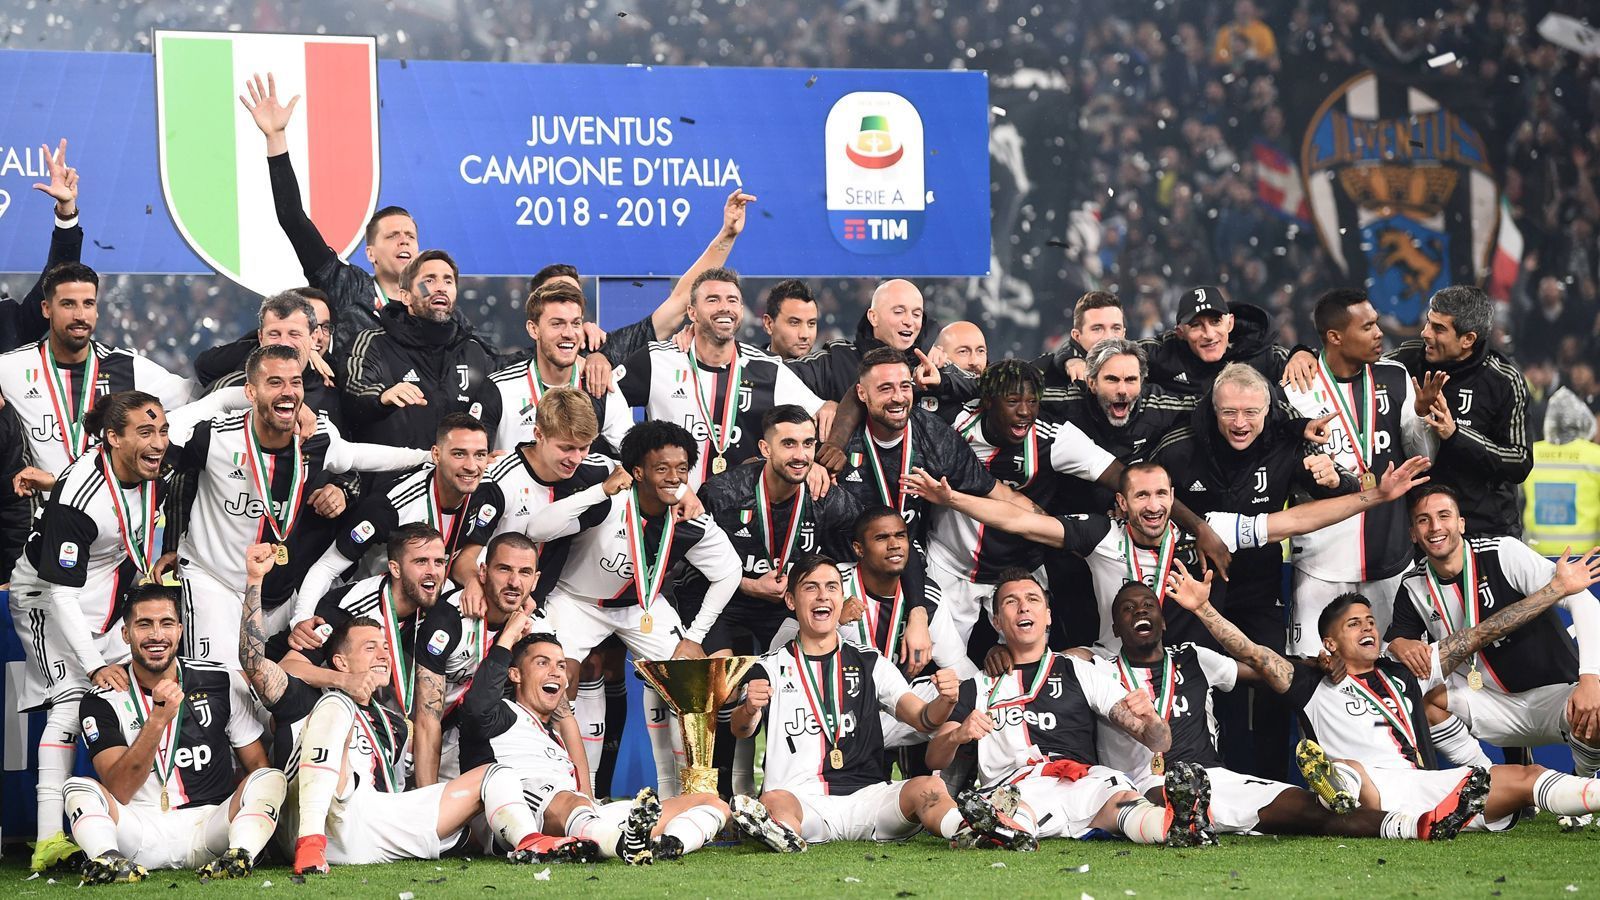 
                <strong>Topf 1: Juventus Turin</strong><br>
                Meister in ItalienGrößter CL-Erfolg: Sieger 1985, 1996
              